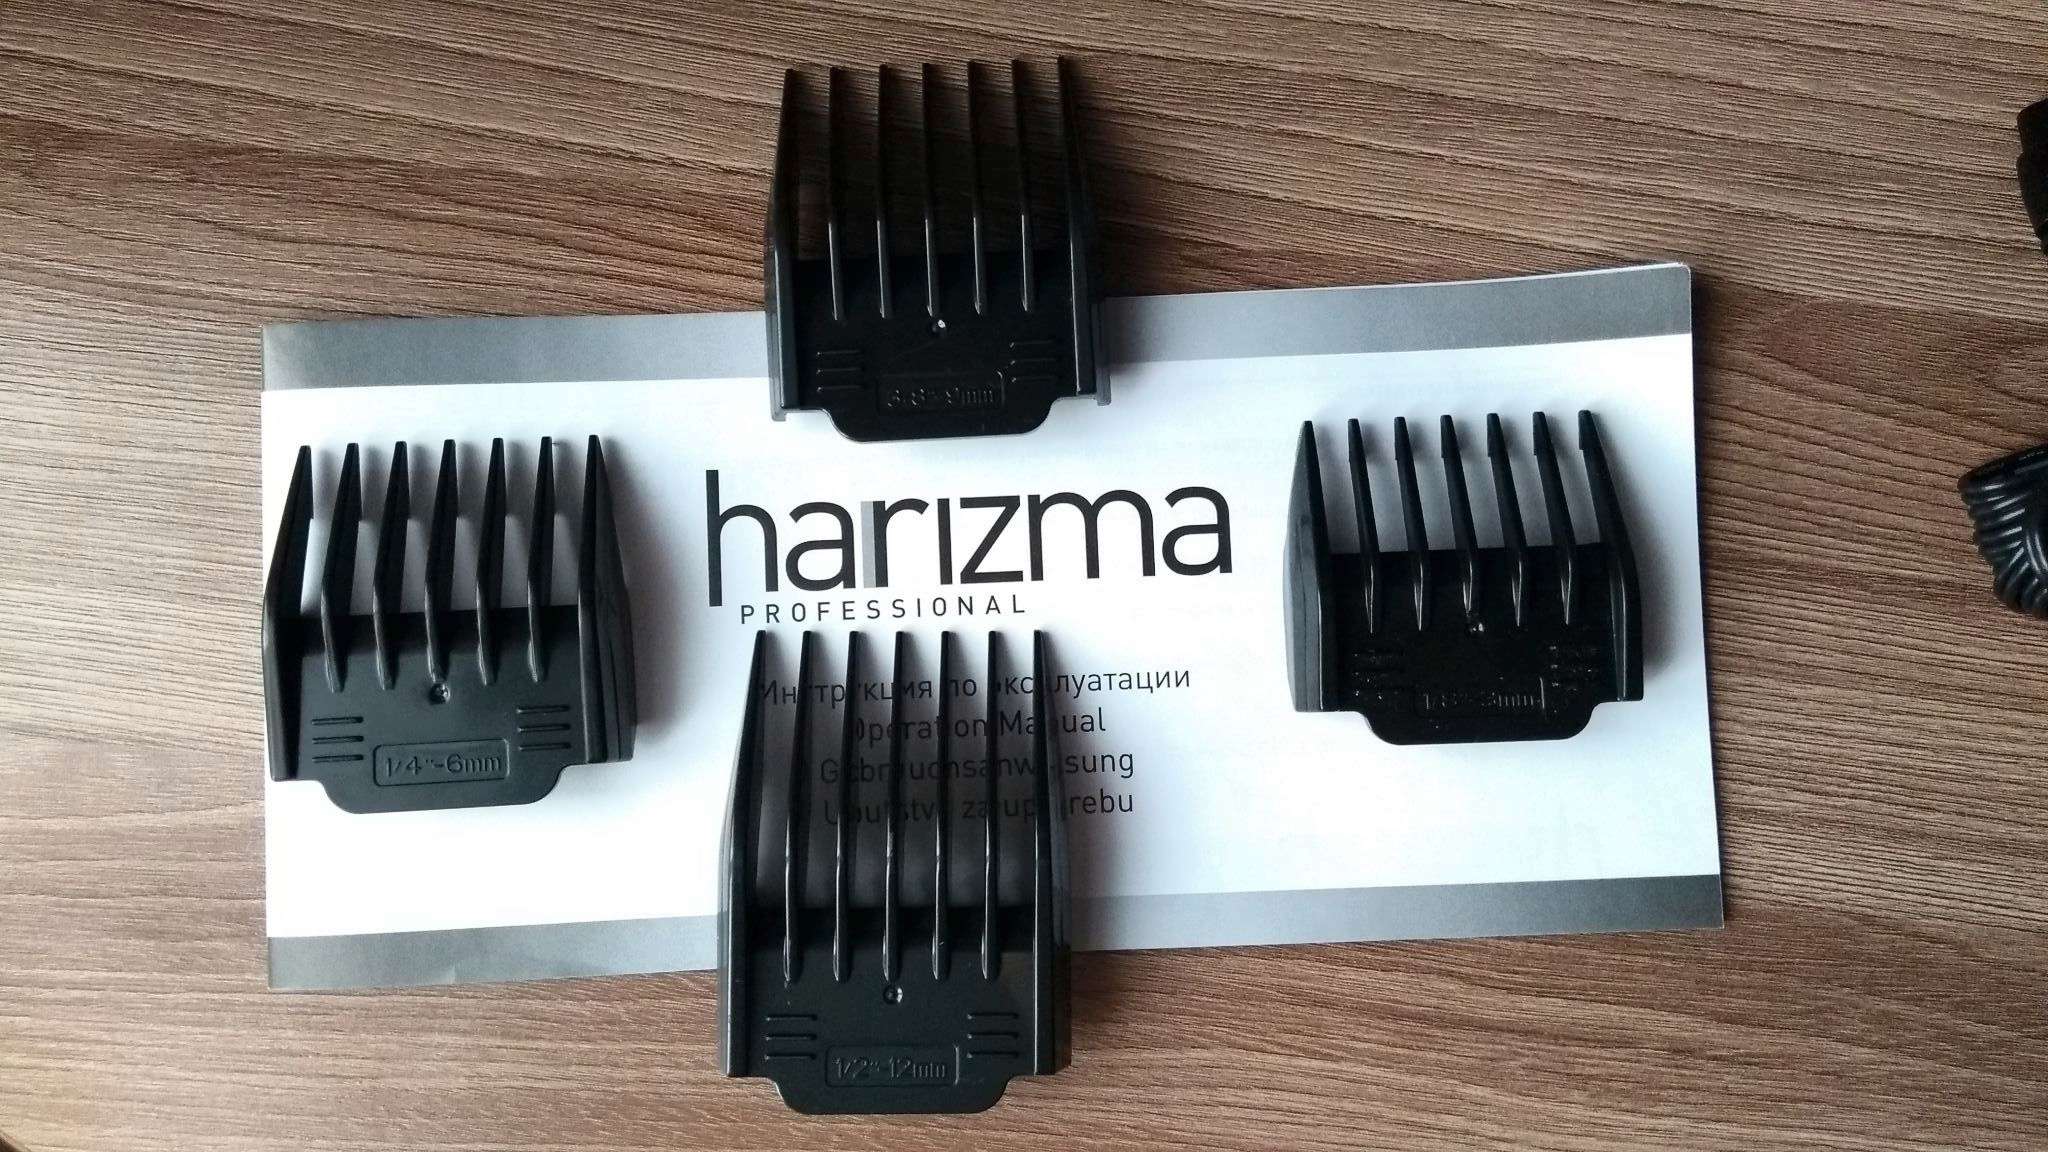 Harizma speed star h10107r машинка для стрижки волос